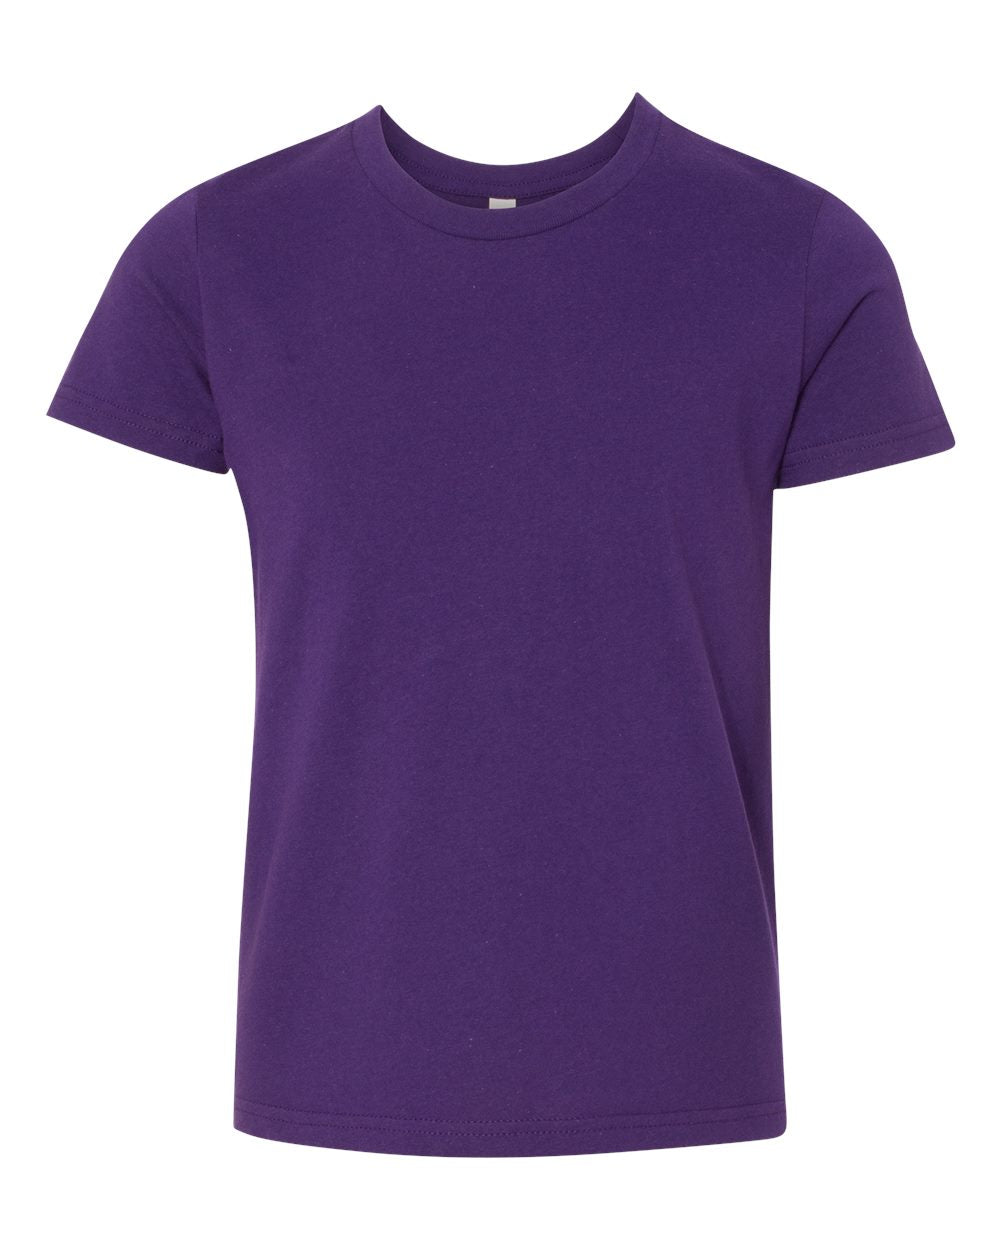 bella+canvas youth t-shirt team purple